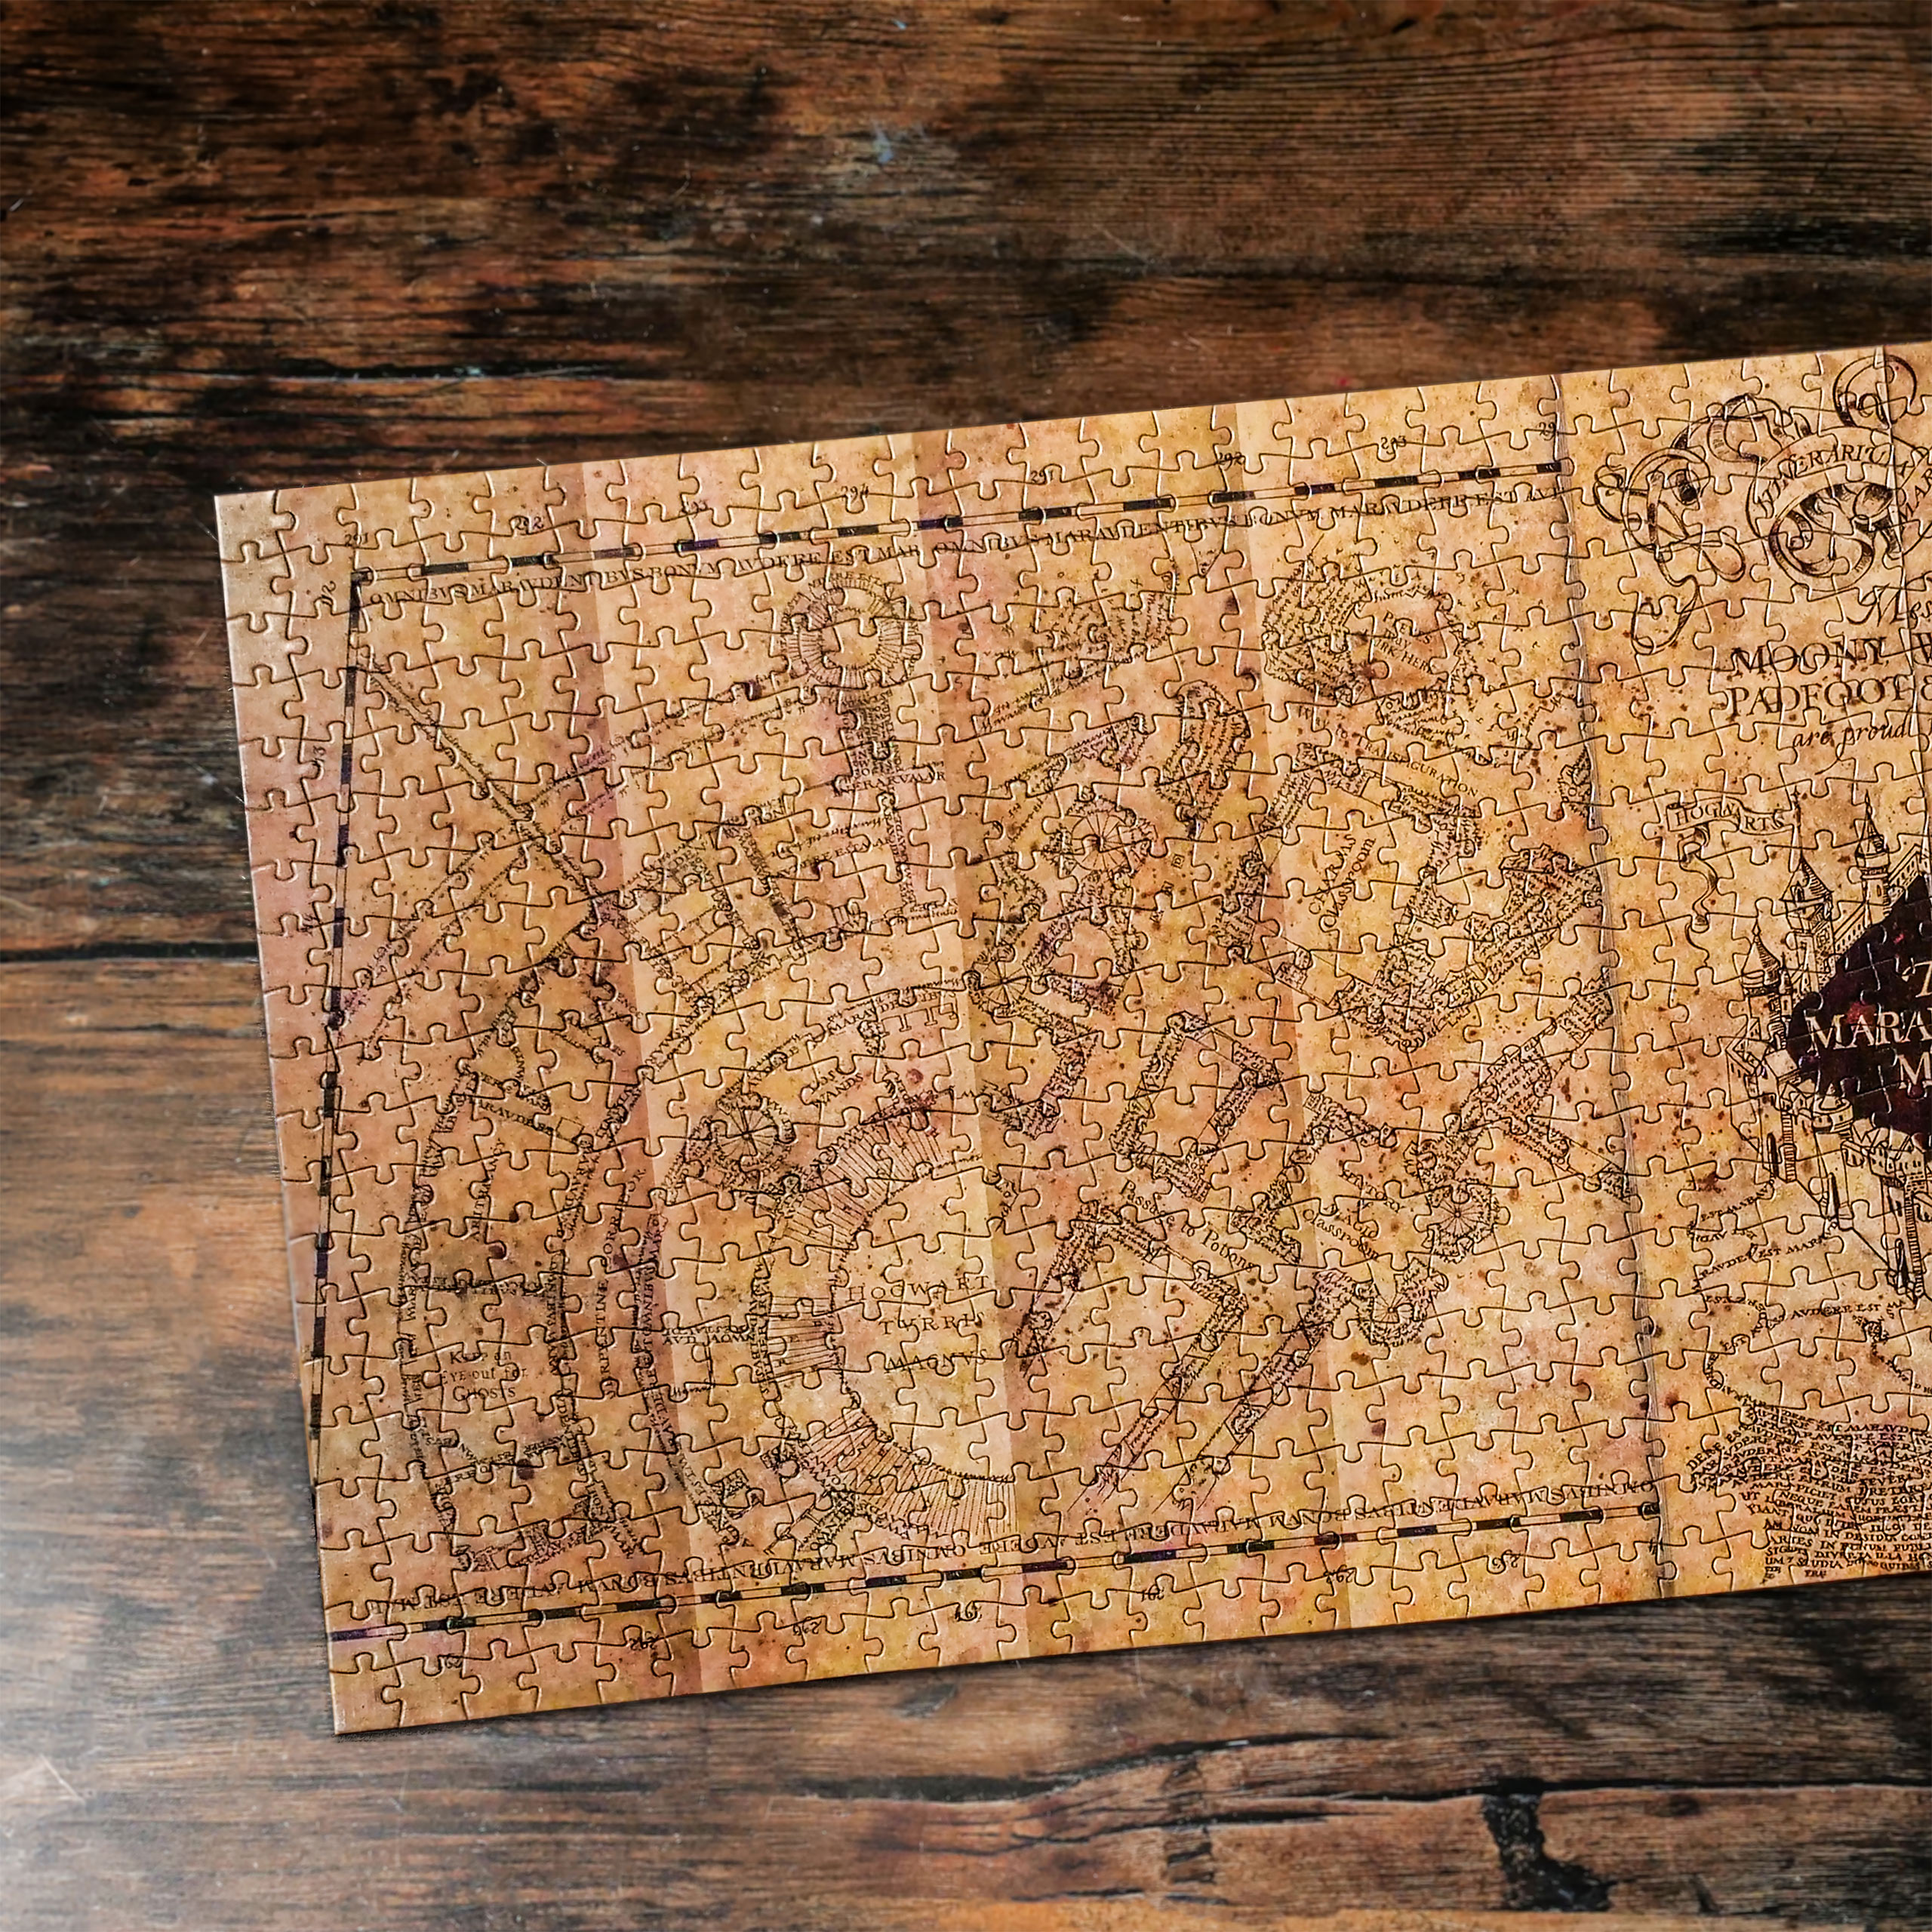 Harry Potter - Karte des Rumtreibers Premium Puzzle